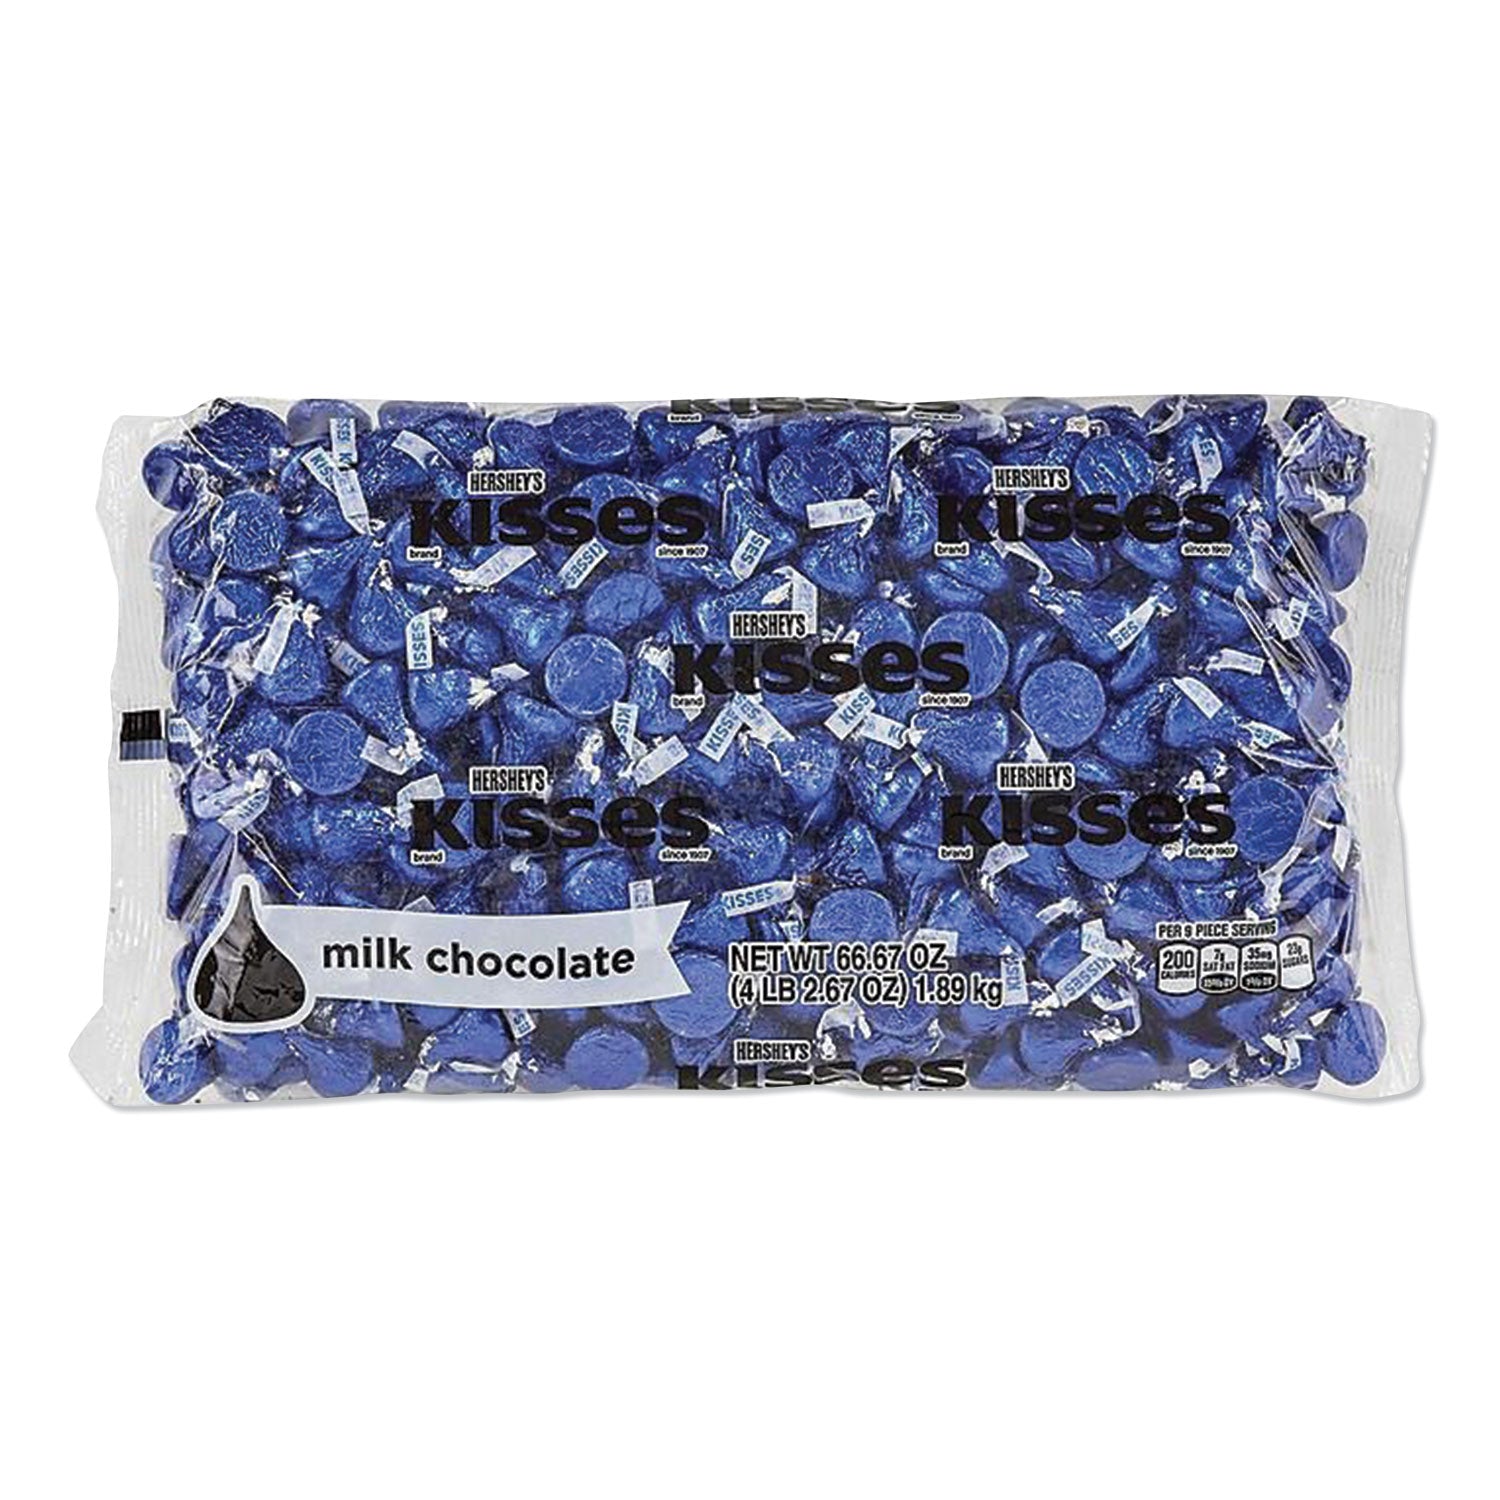 kisses-milk-chocolate-dark-blue-wrappers-667-oz-bag_hrs60194 - 1